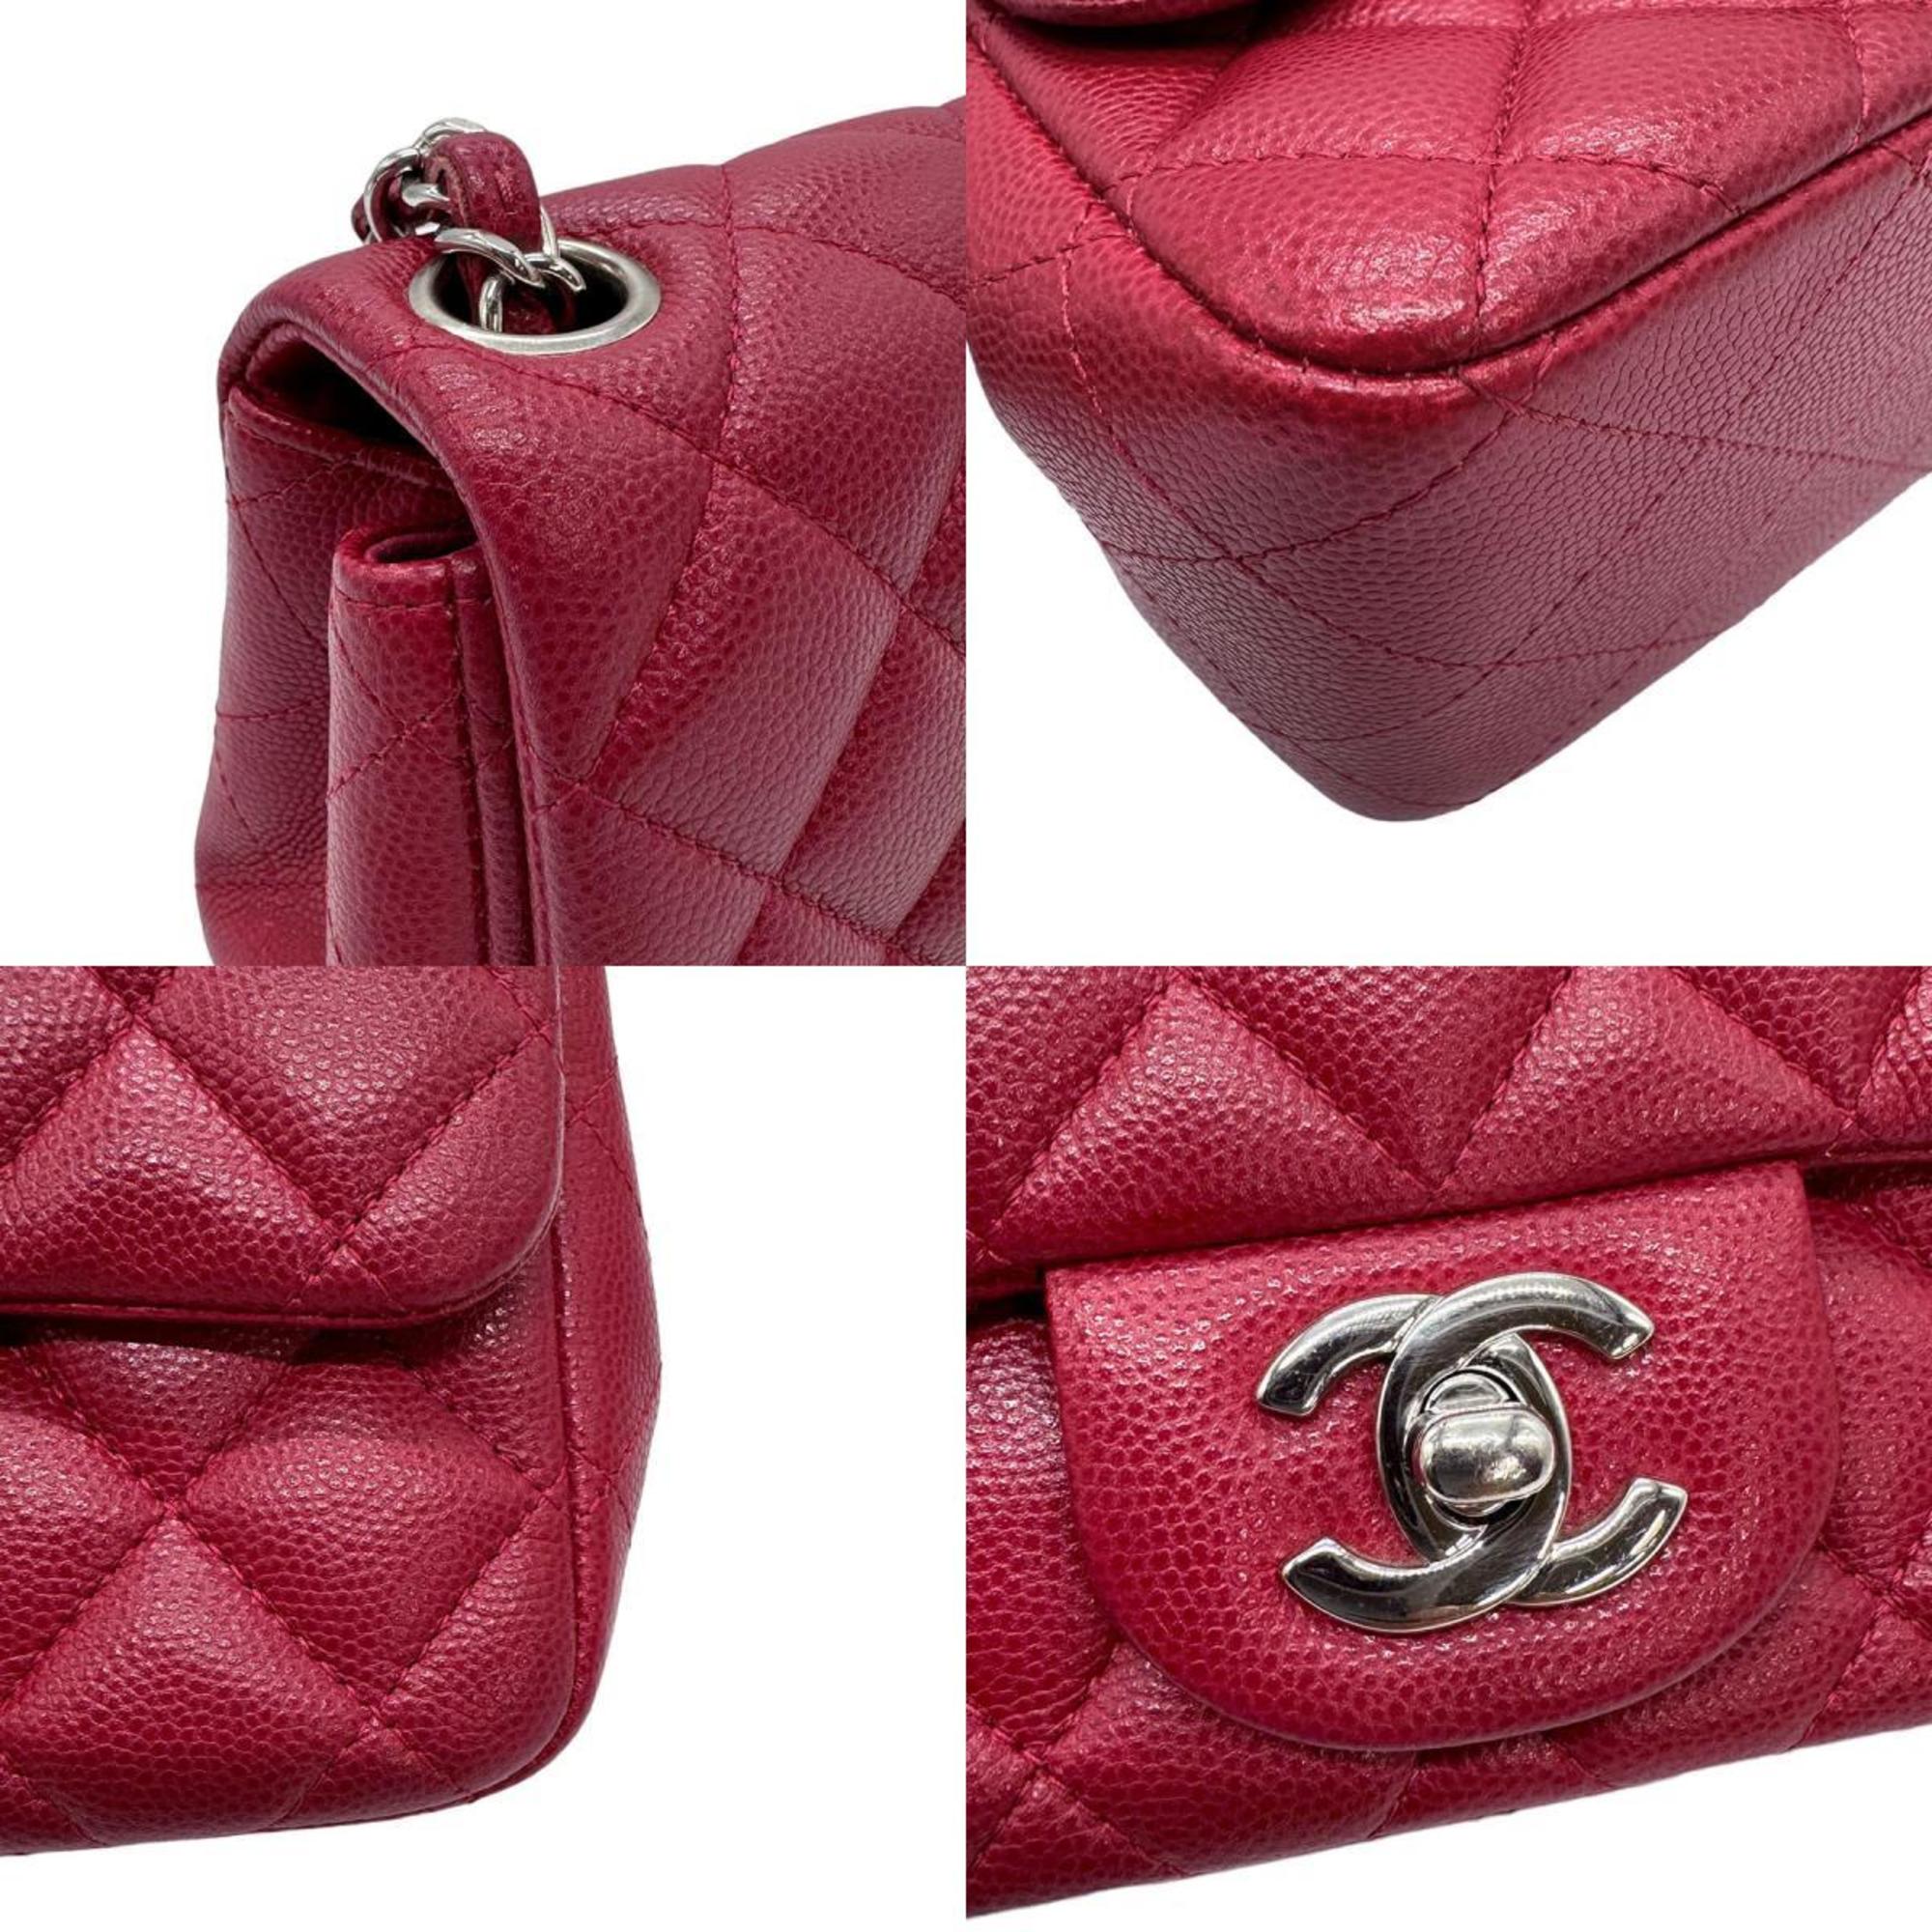 CHANEL Shoulder Bag Matelasse Caviar Skin Leather Red Silver Women's z0551